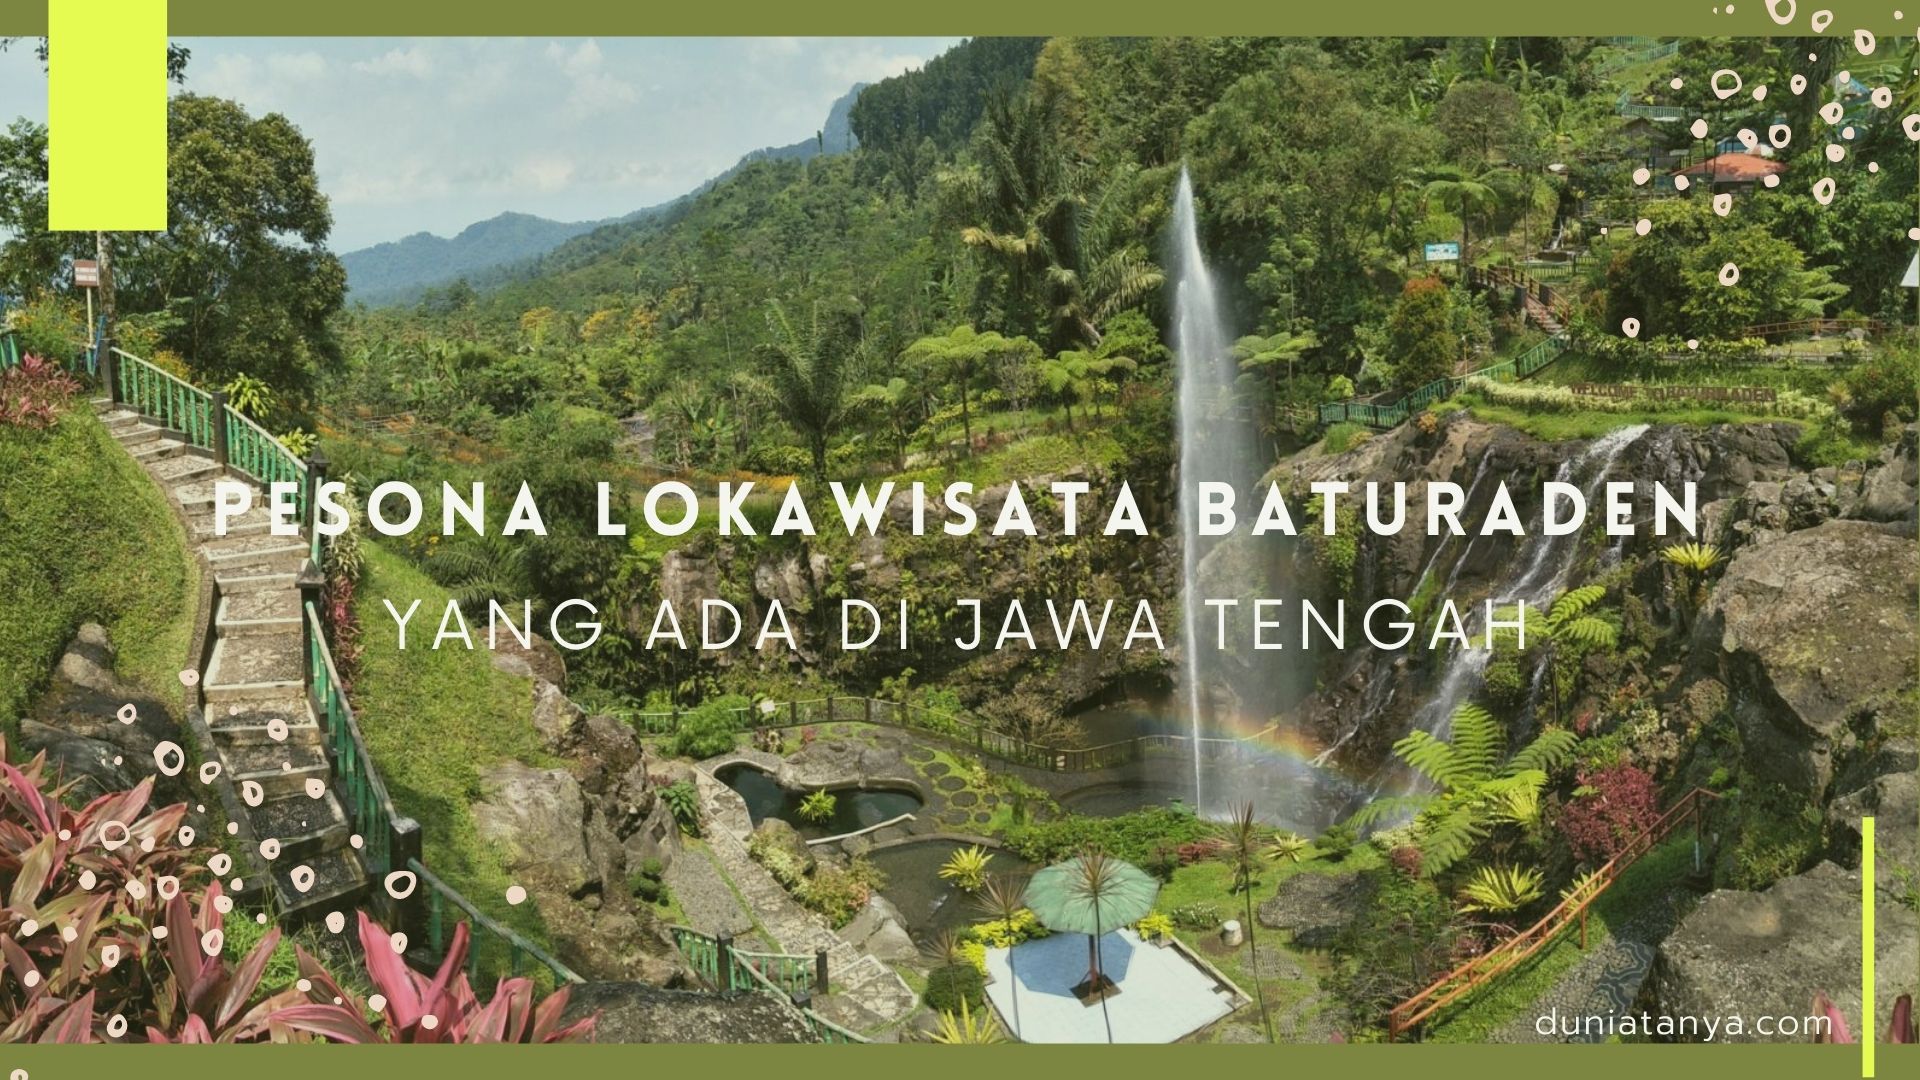 You are currently viewing Pesona Lokawisata Baturaden Yang Ada Di Jawa Tengah